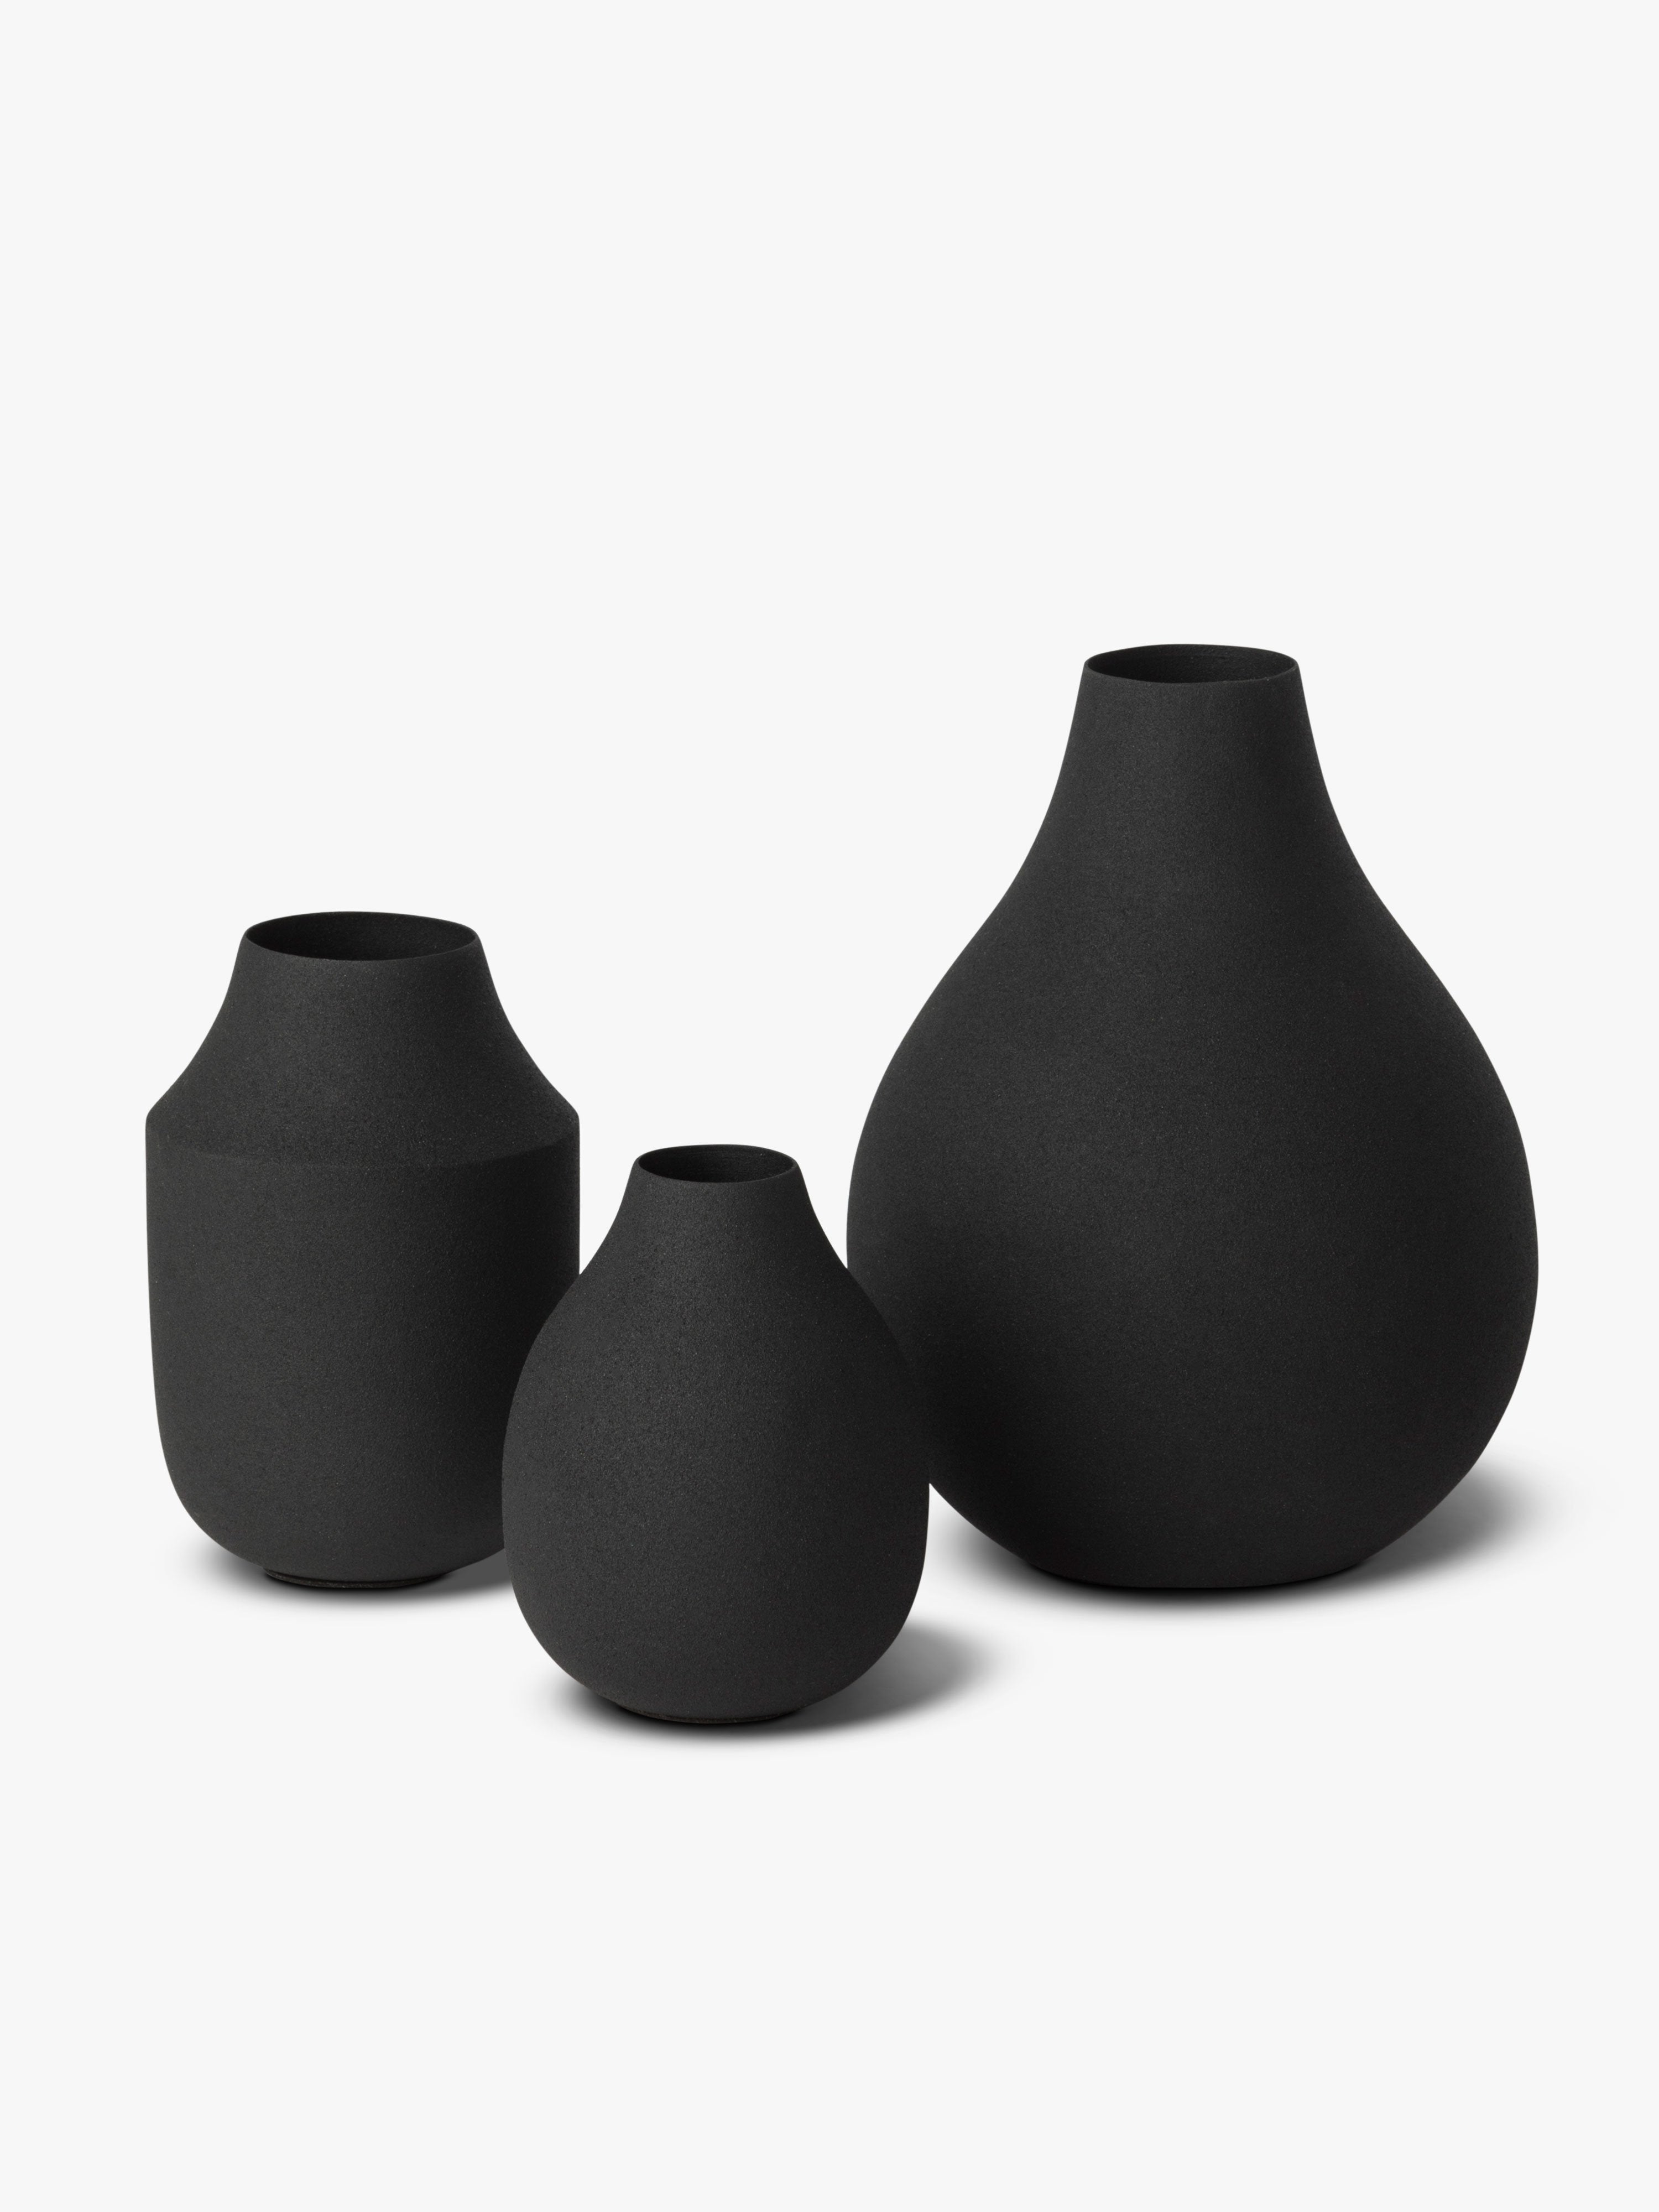 Mona Trio of Vases - Black Vase Winter 19 